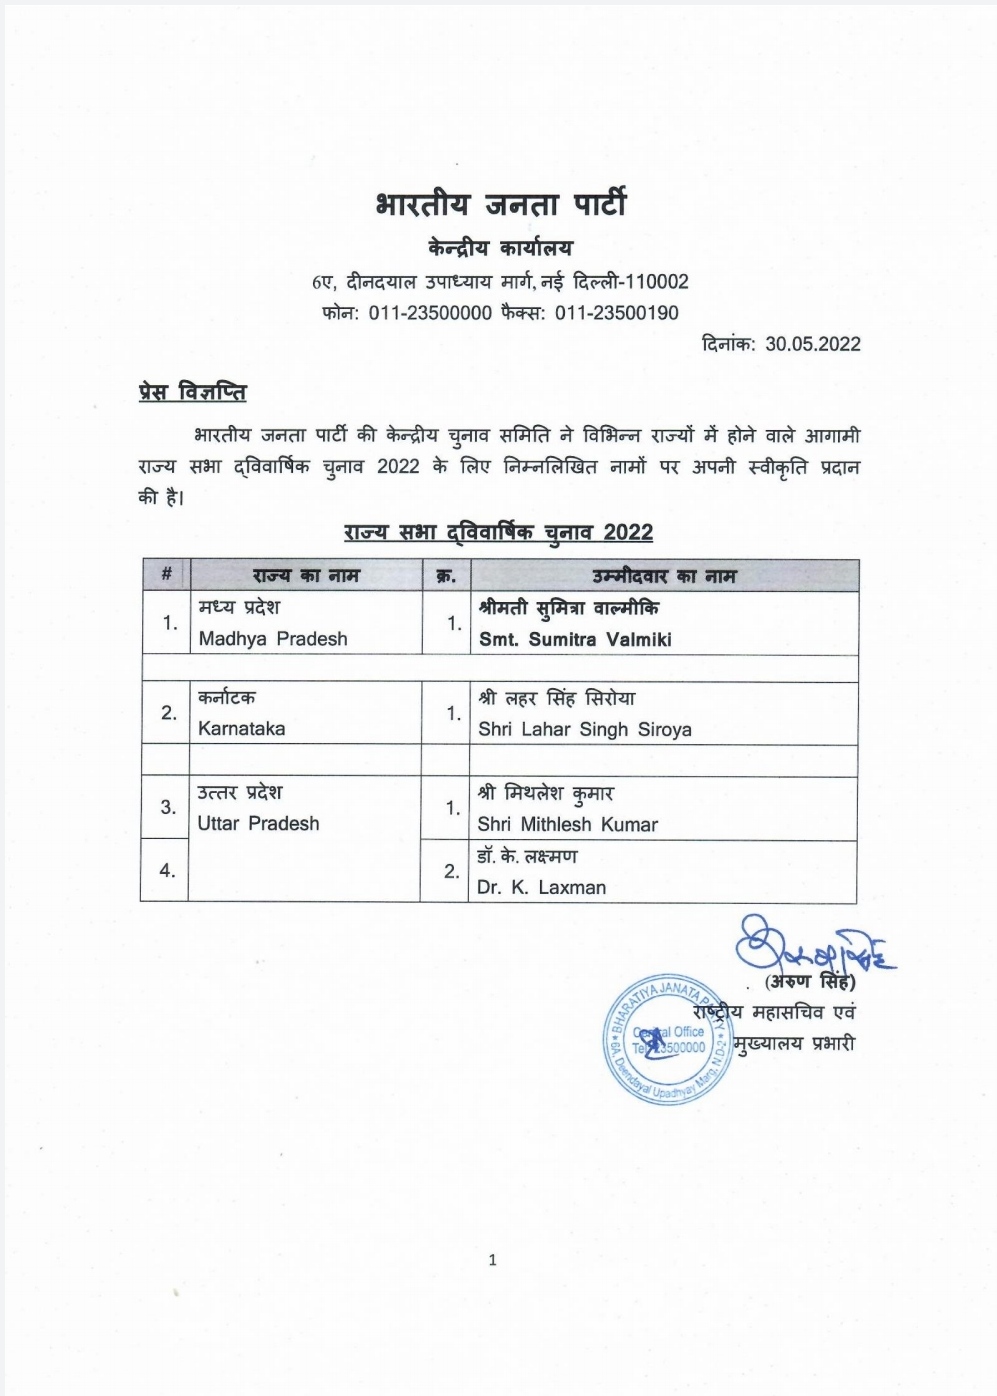 bjp-announced-its-third-candidate-as-lehar-singh-for-rajyasbha-elections